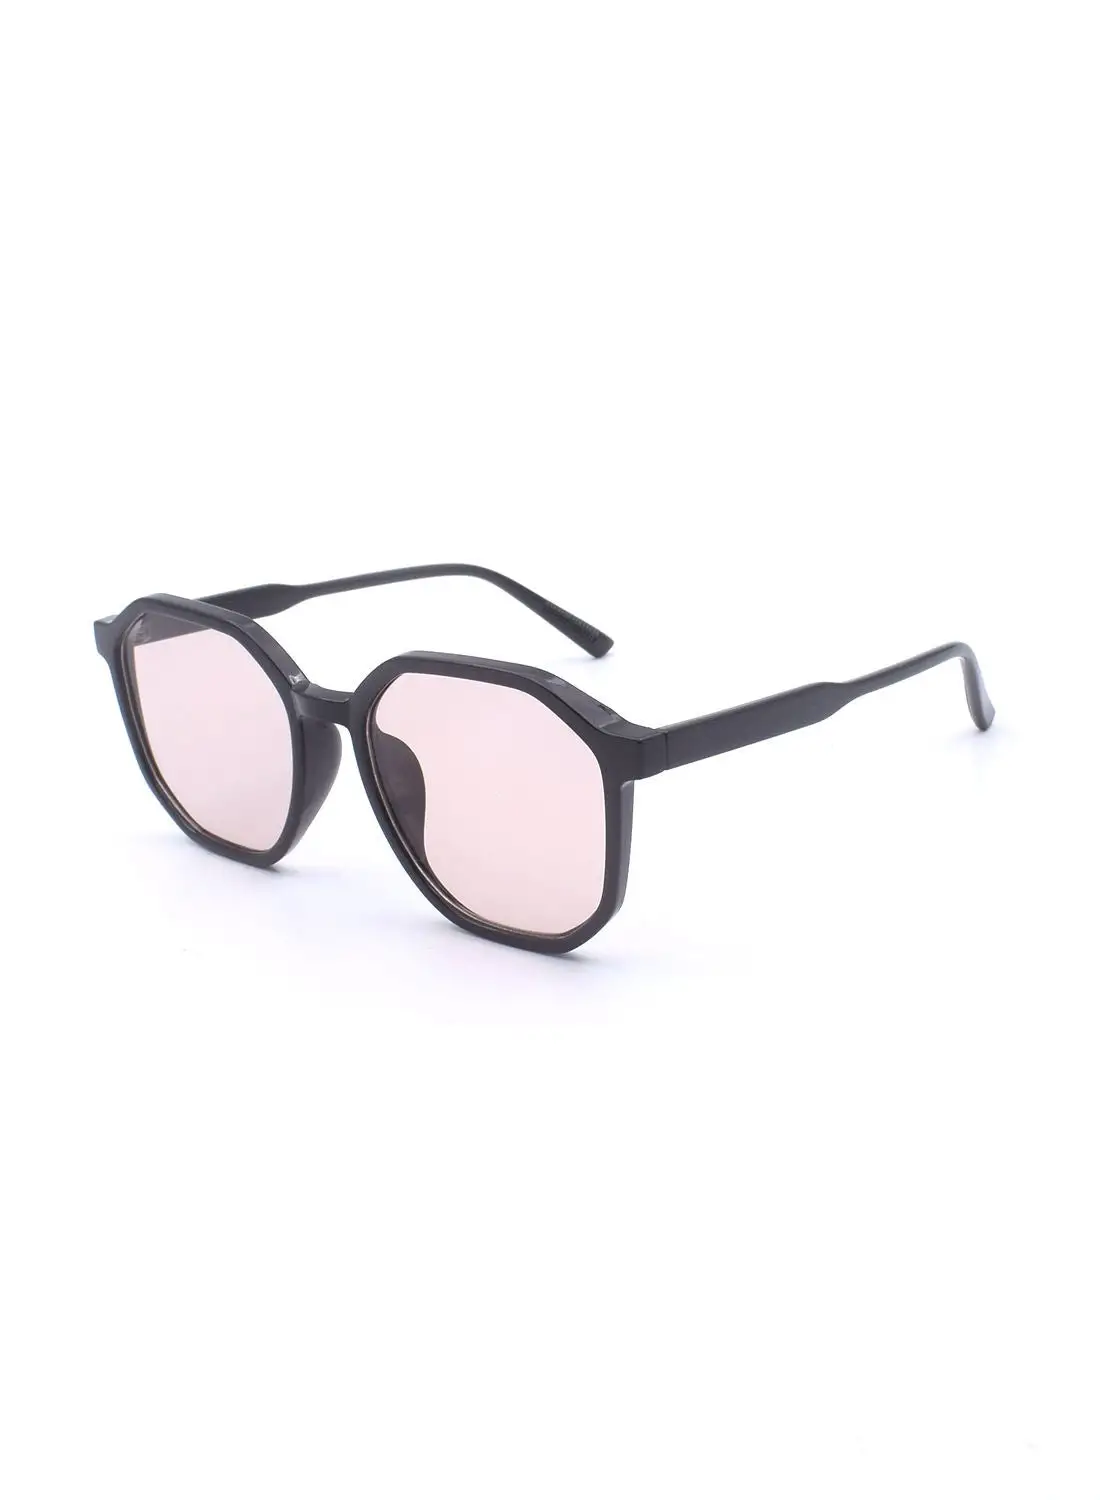 MADEYES Hexagon Sunglasses EE20X060-3